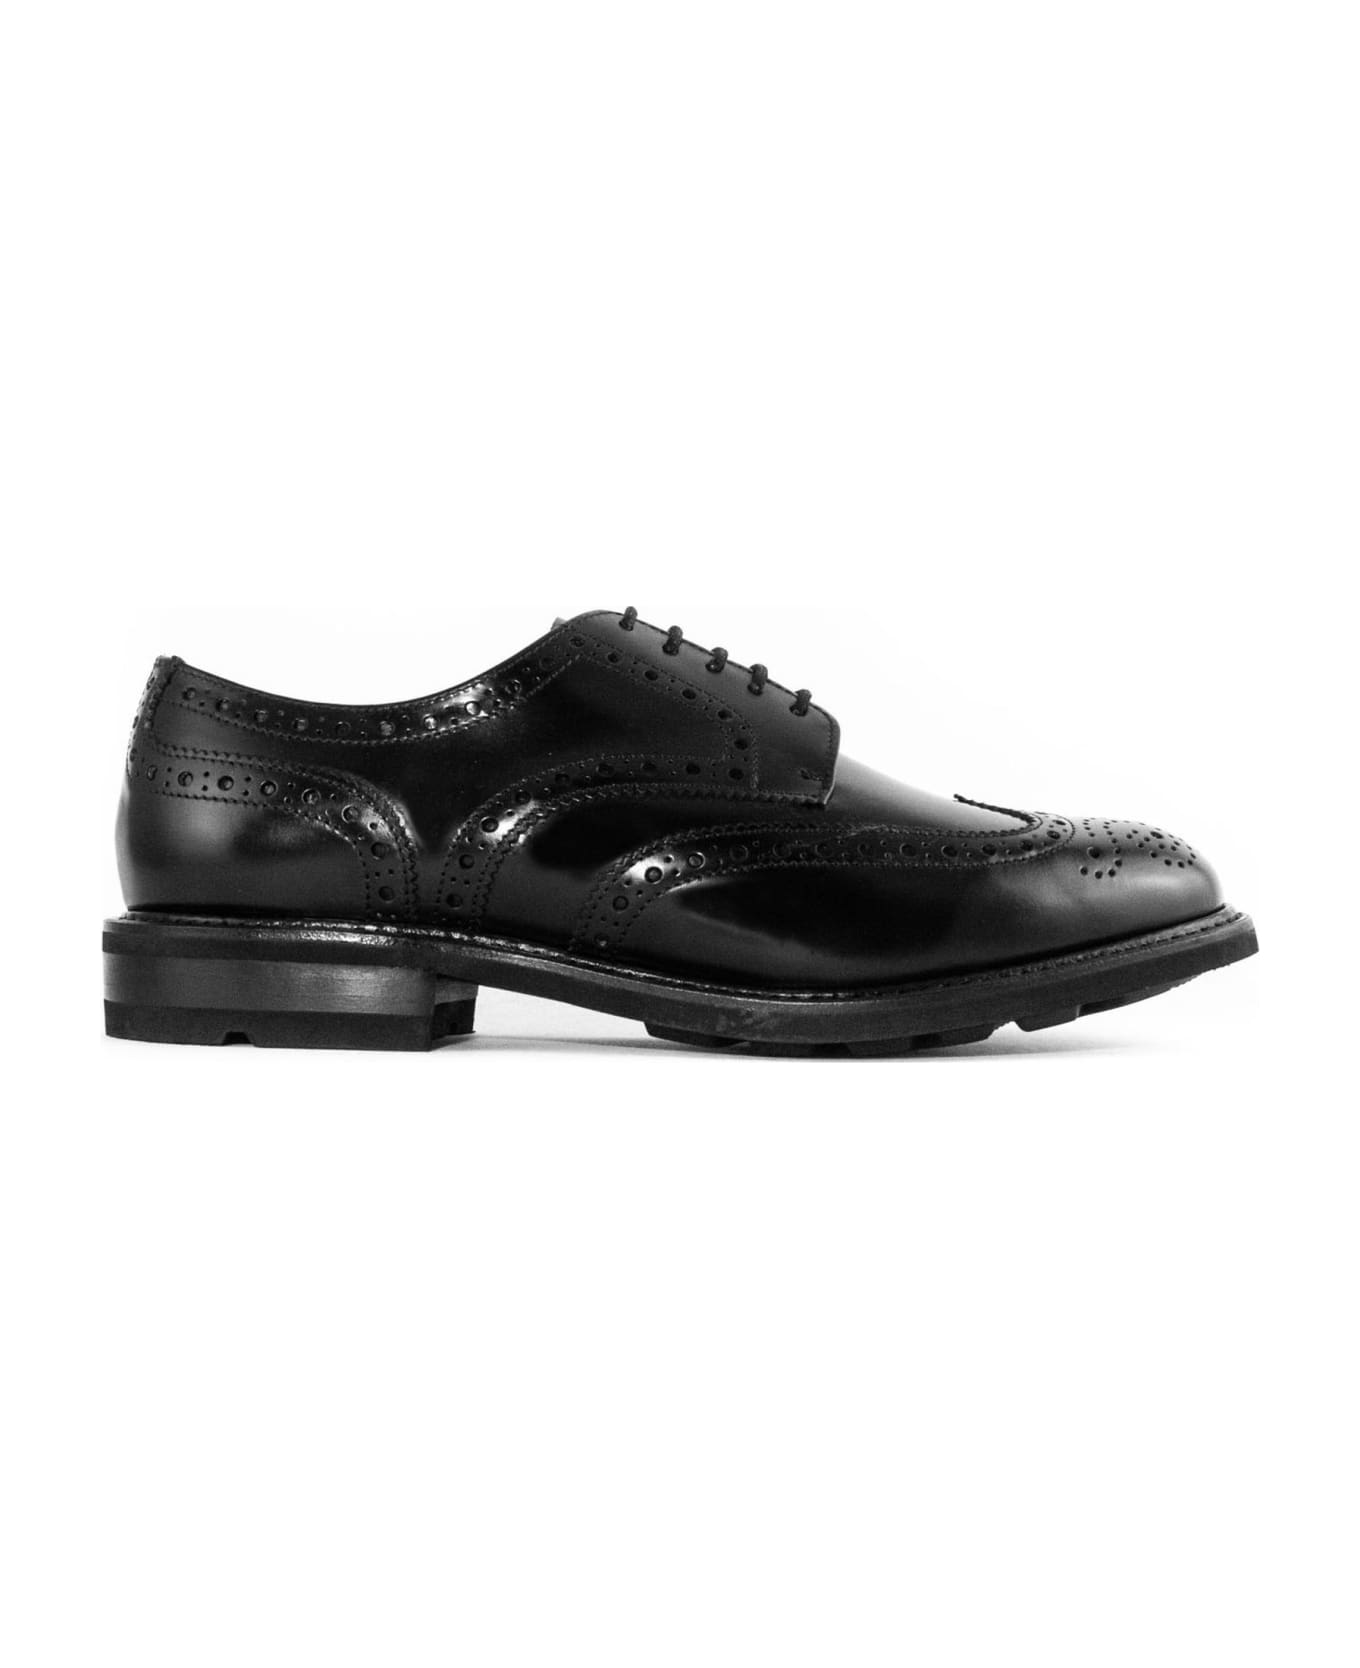 Berwick 1707 Black Shiny Leather Derby Shoes - Nero